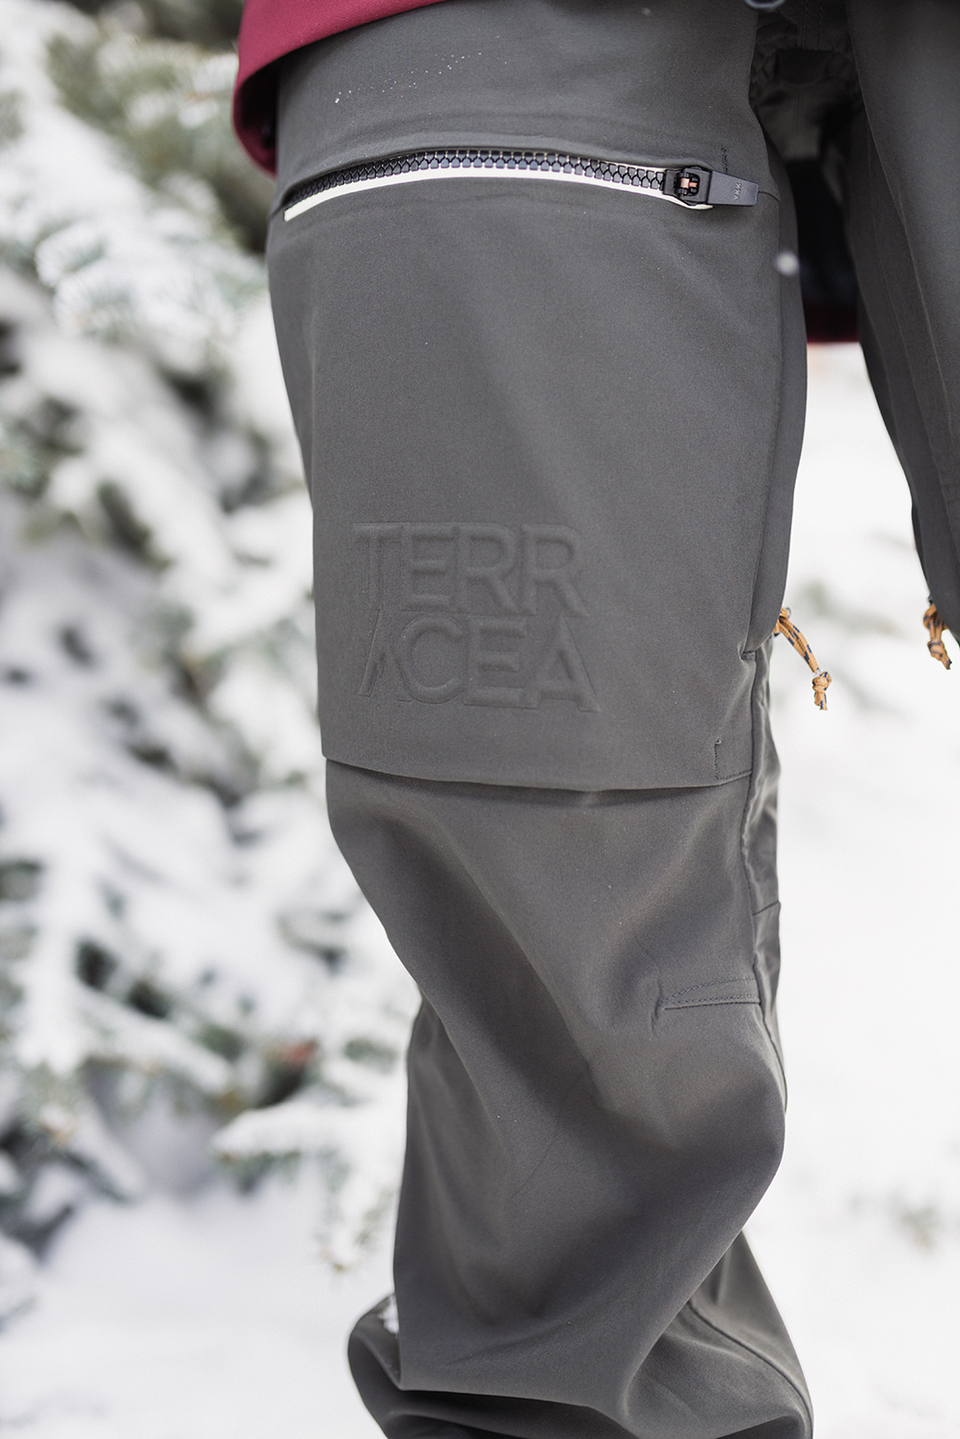 CHANTRELLE SOFTSHELL SNOW PANT by Terracea - Waterproof, Windproof, Weatherproof Technical Outerwear